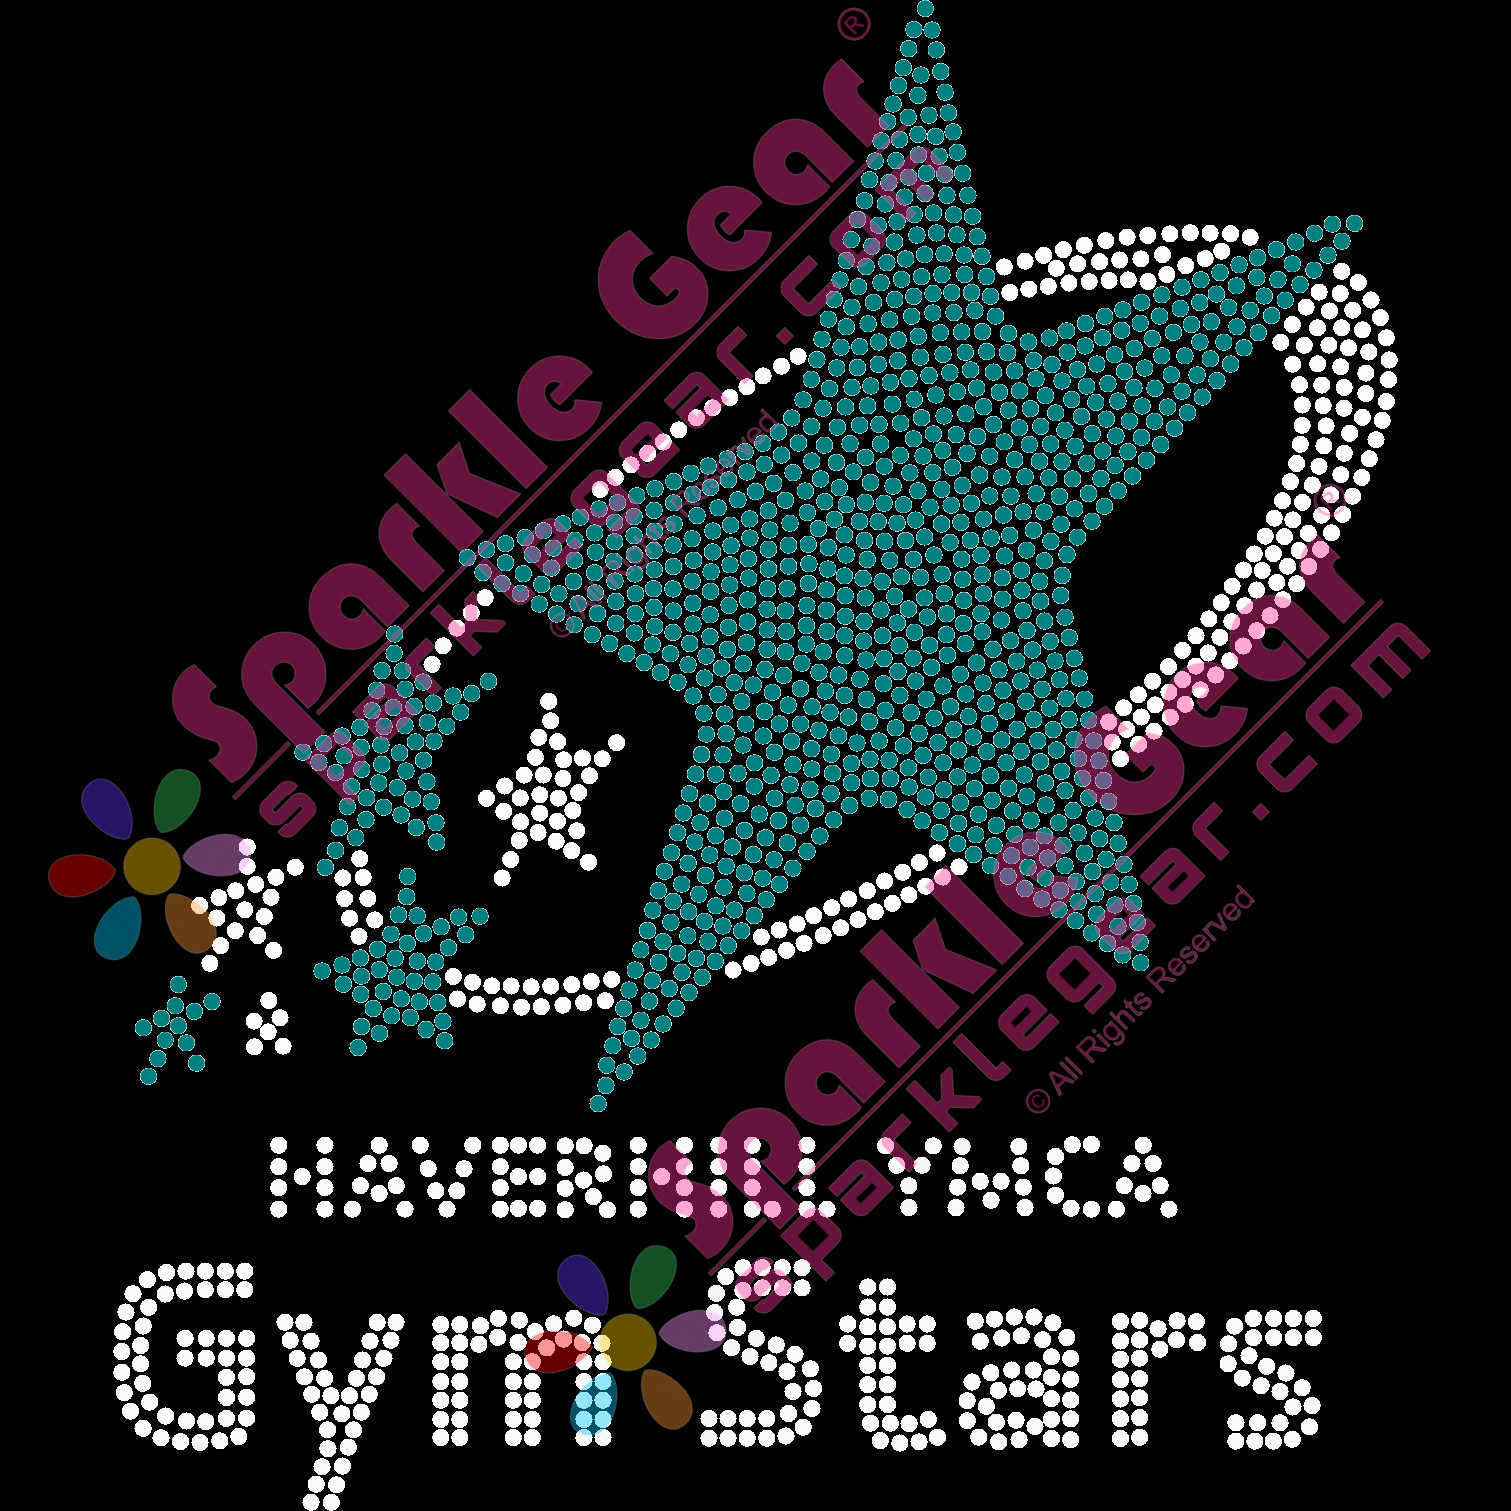 Haverhill YMCA